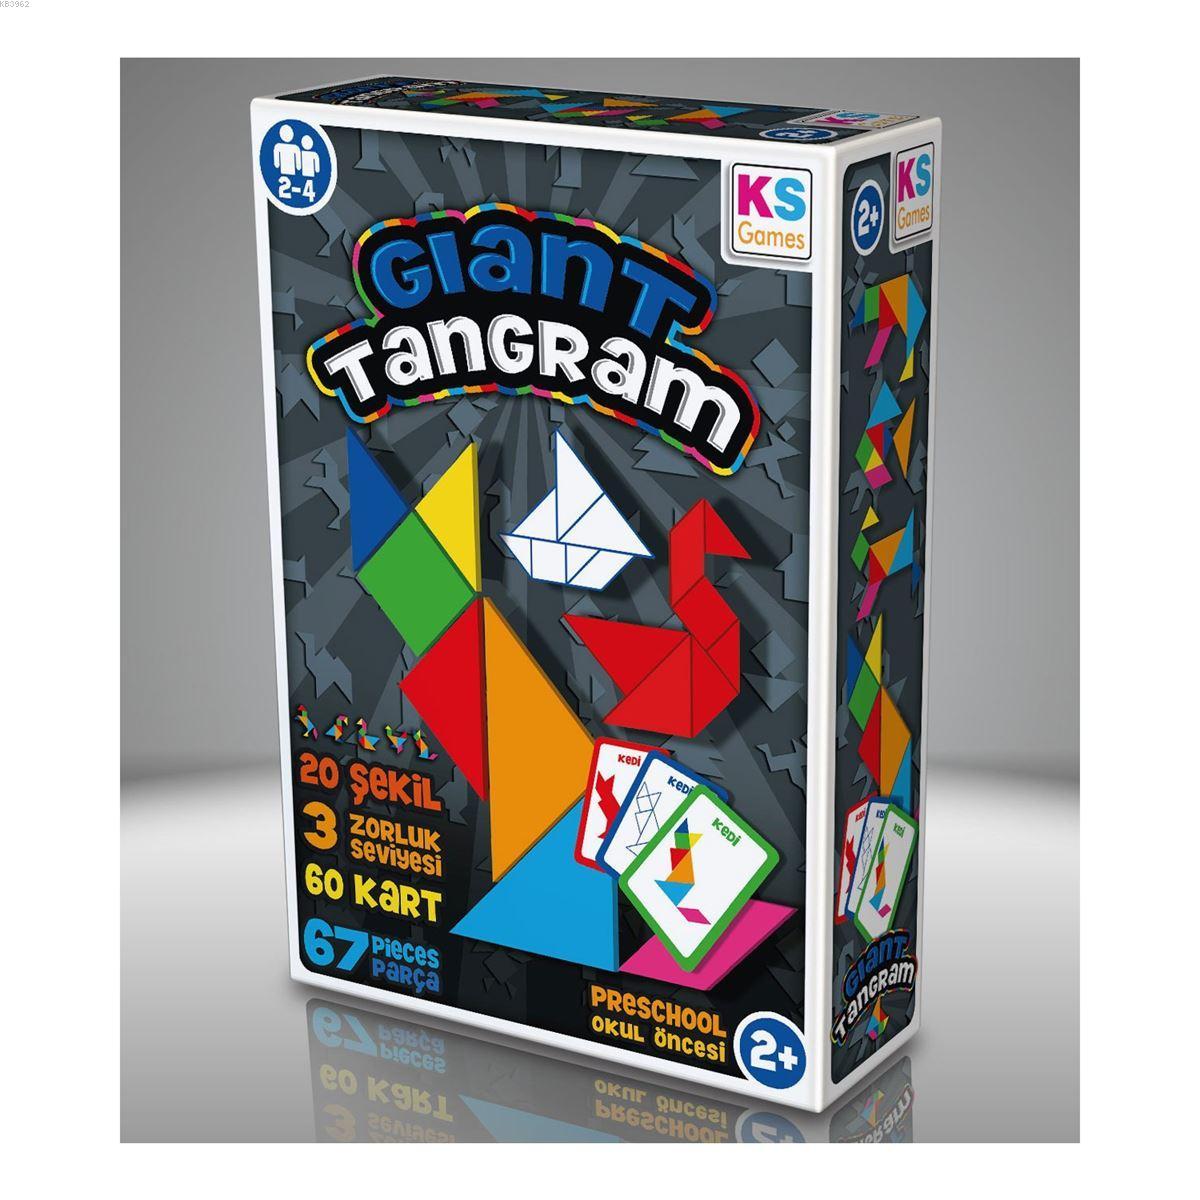 KS Games Gt 239 Tangram